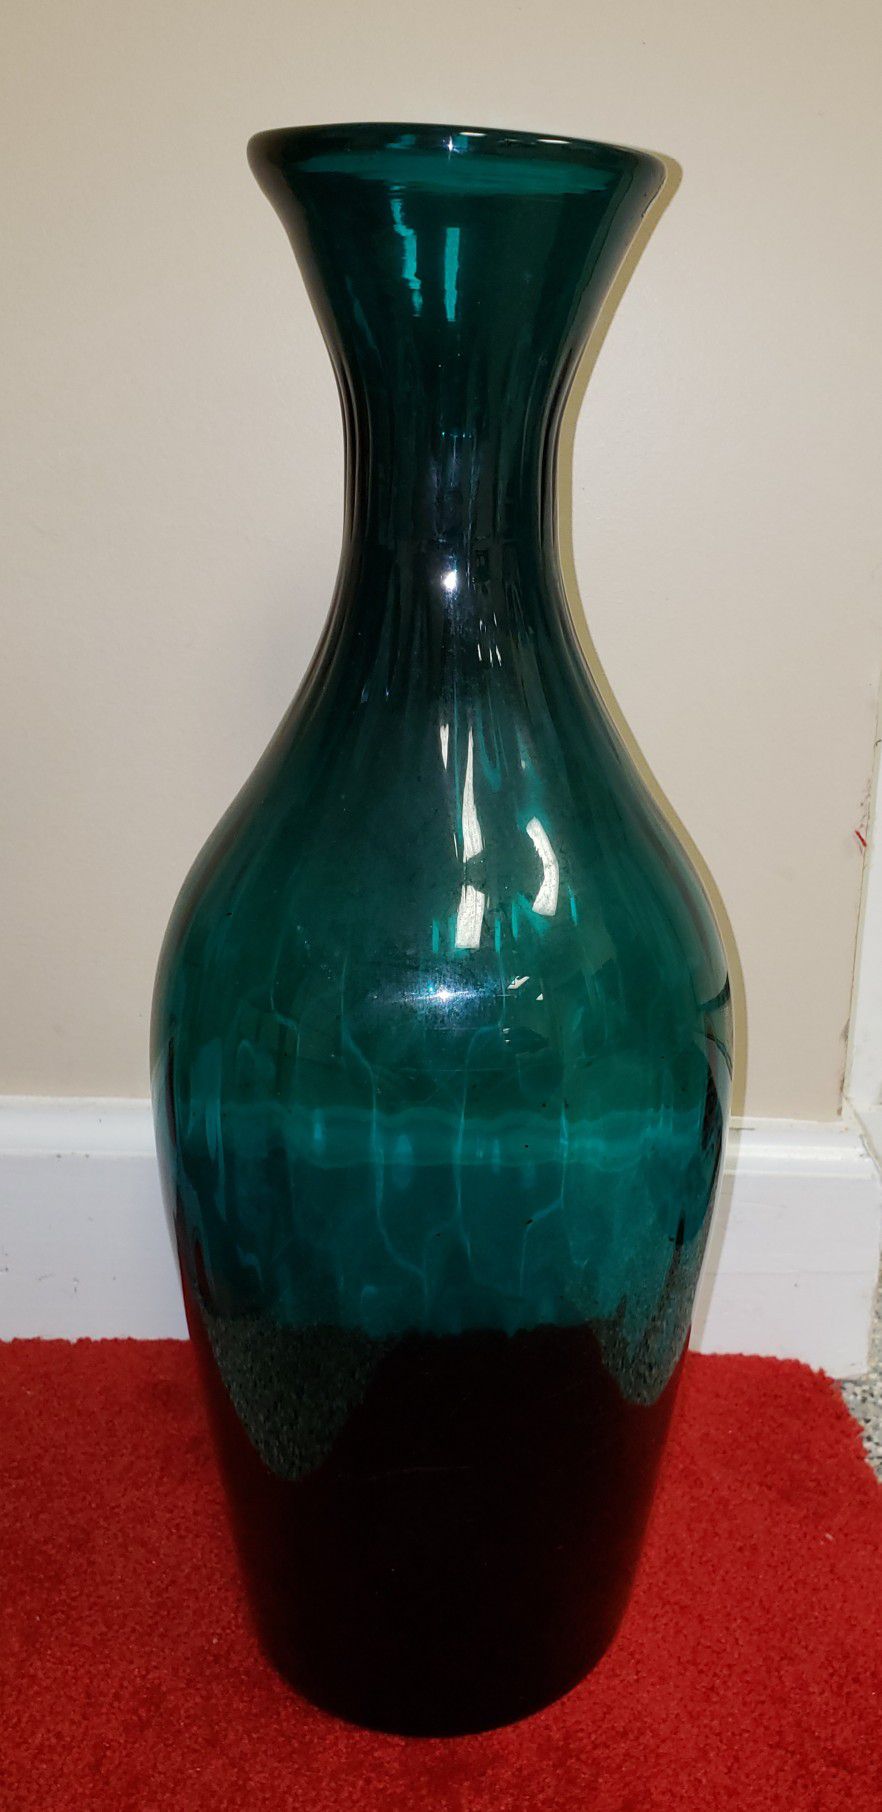 Large Decorative Glass Vase - Green 17 1/2" Tall